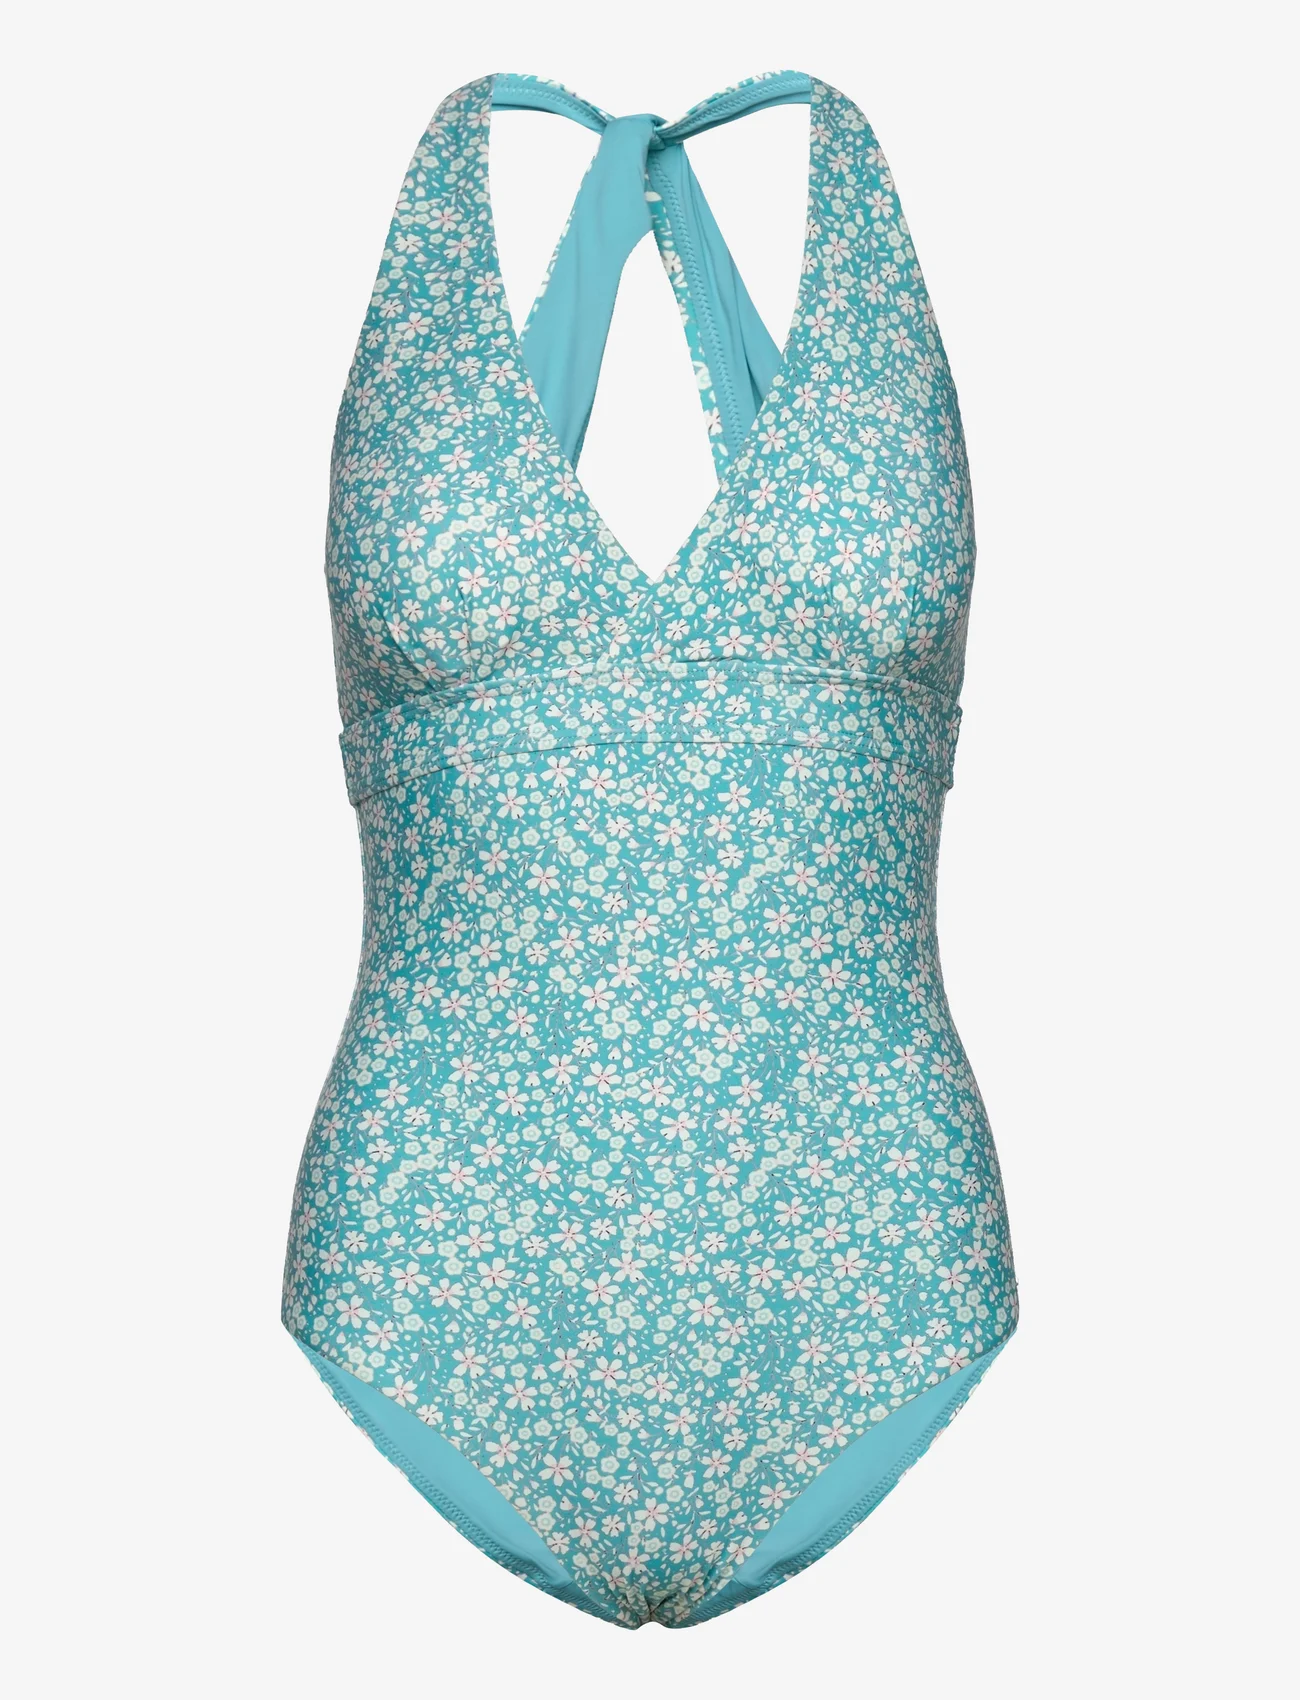 Abecita - Maui Swimsuit - swimsuits - turqouise - 0